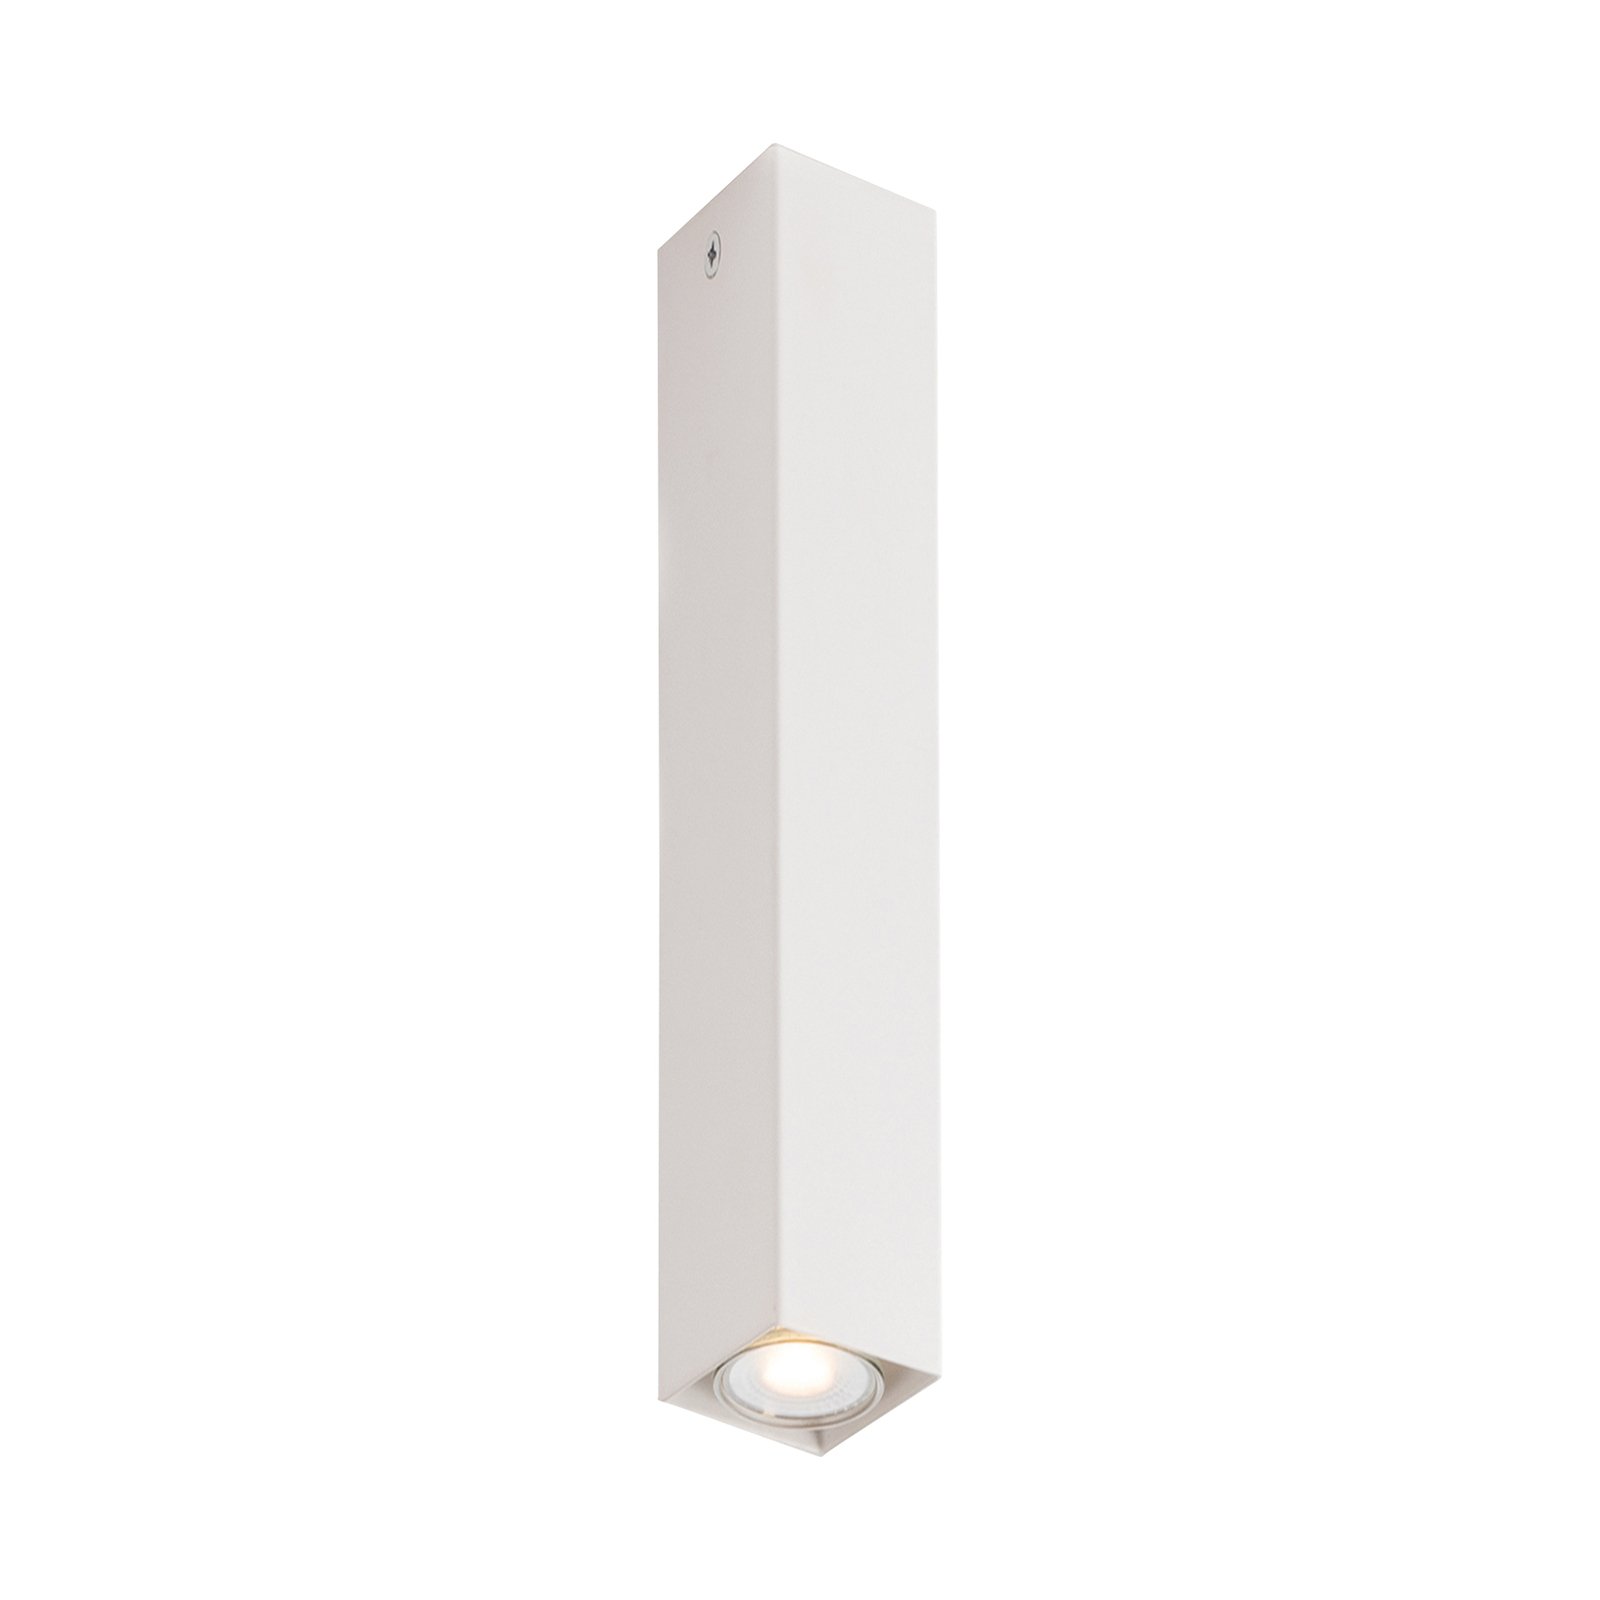 Fluke downlight, Form angular, altura 40 cm, branco